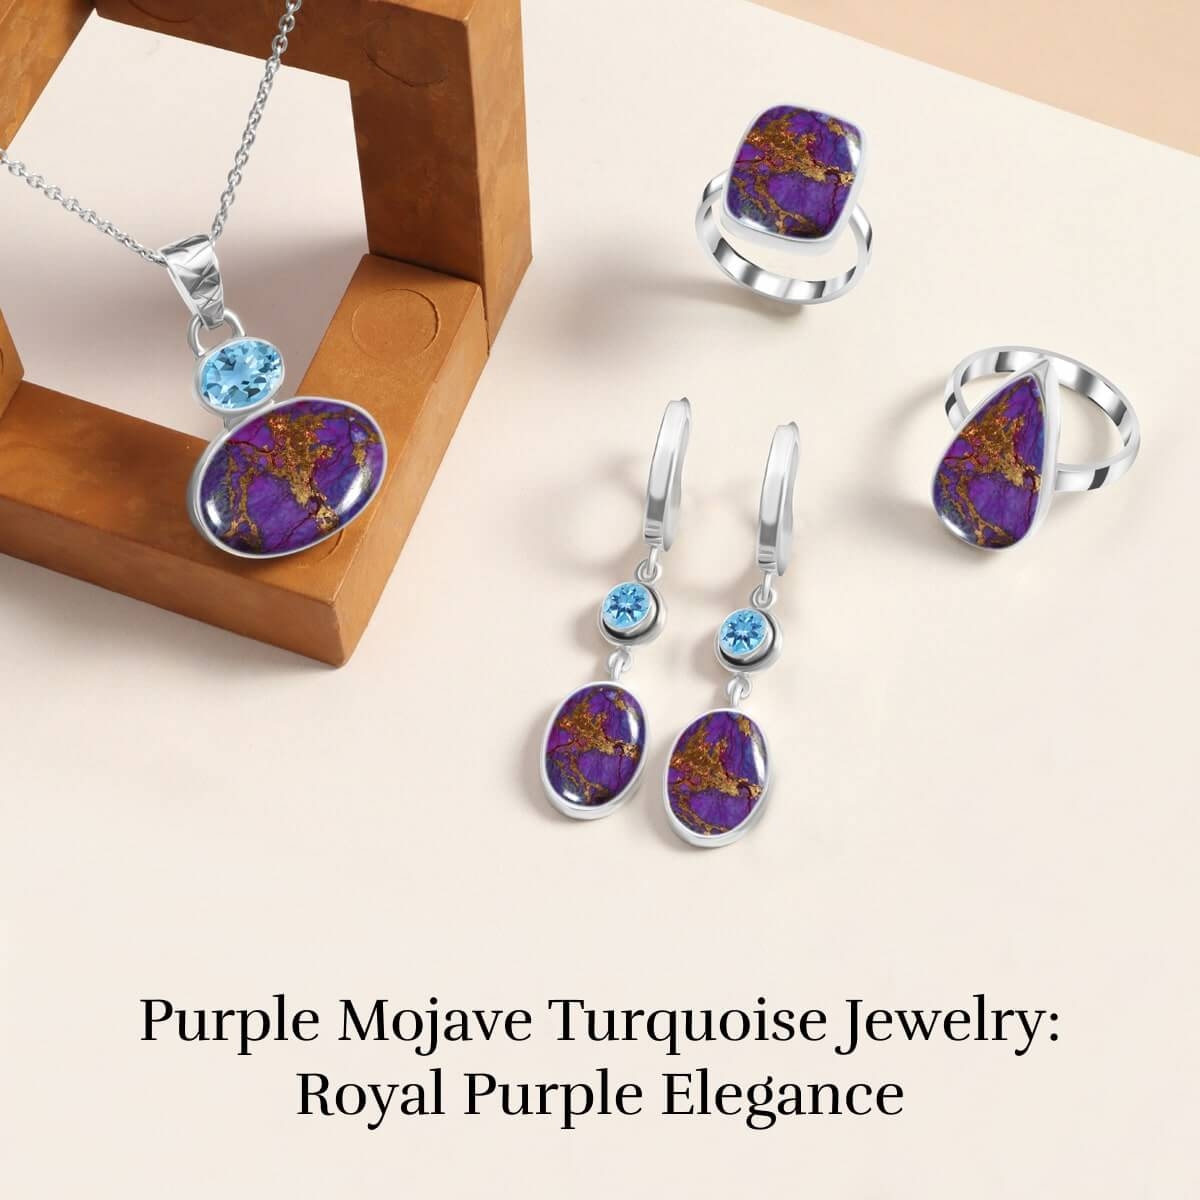 Purple Mojave Turquoise jewelry